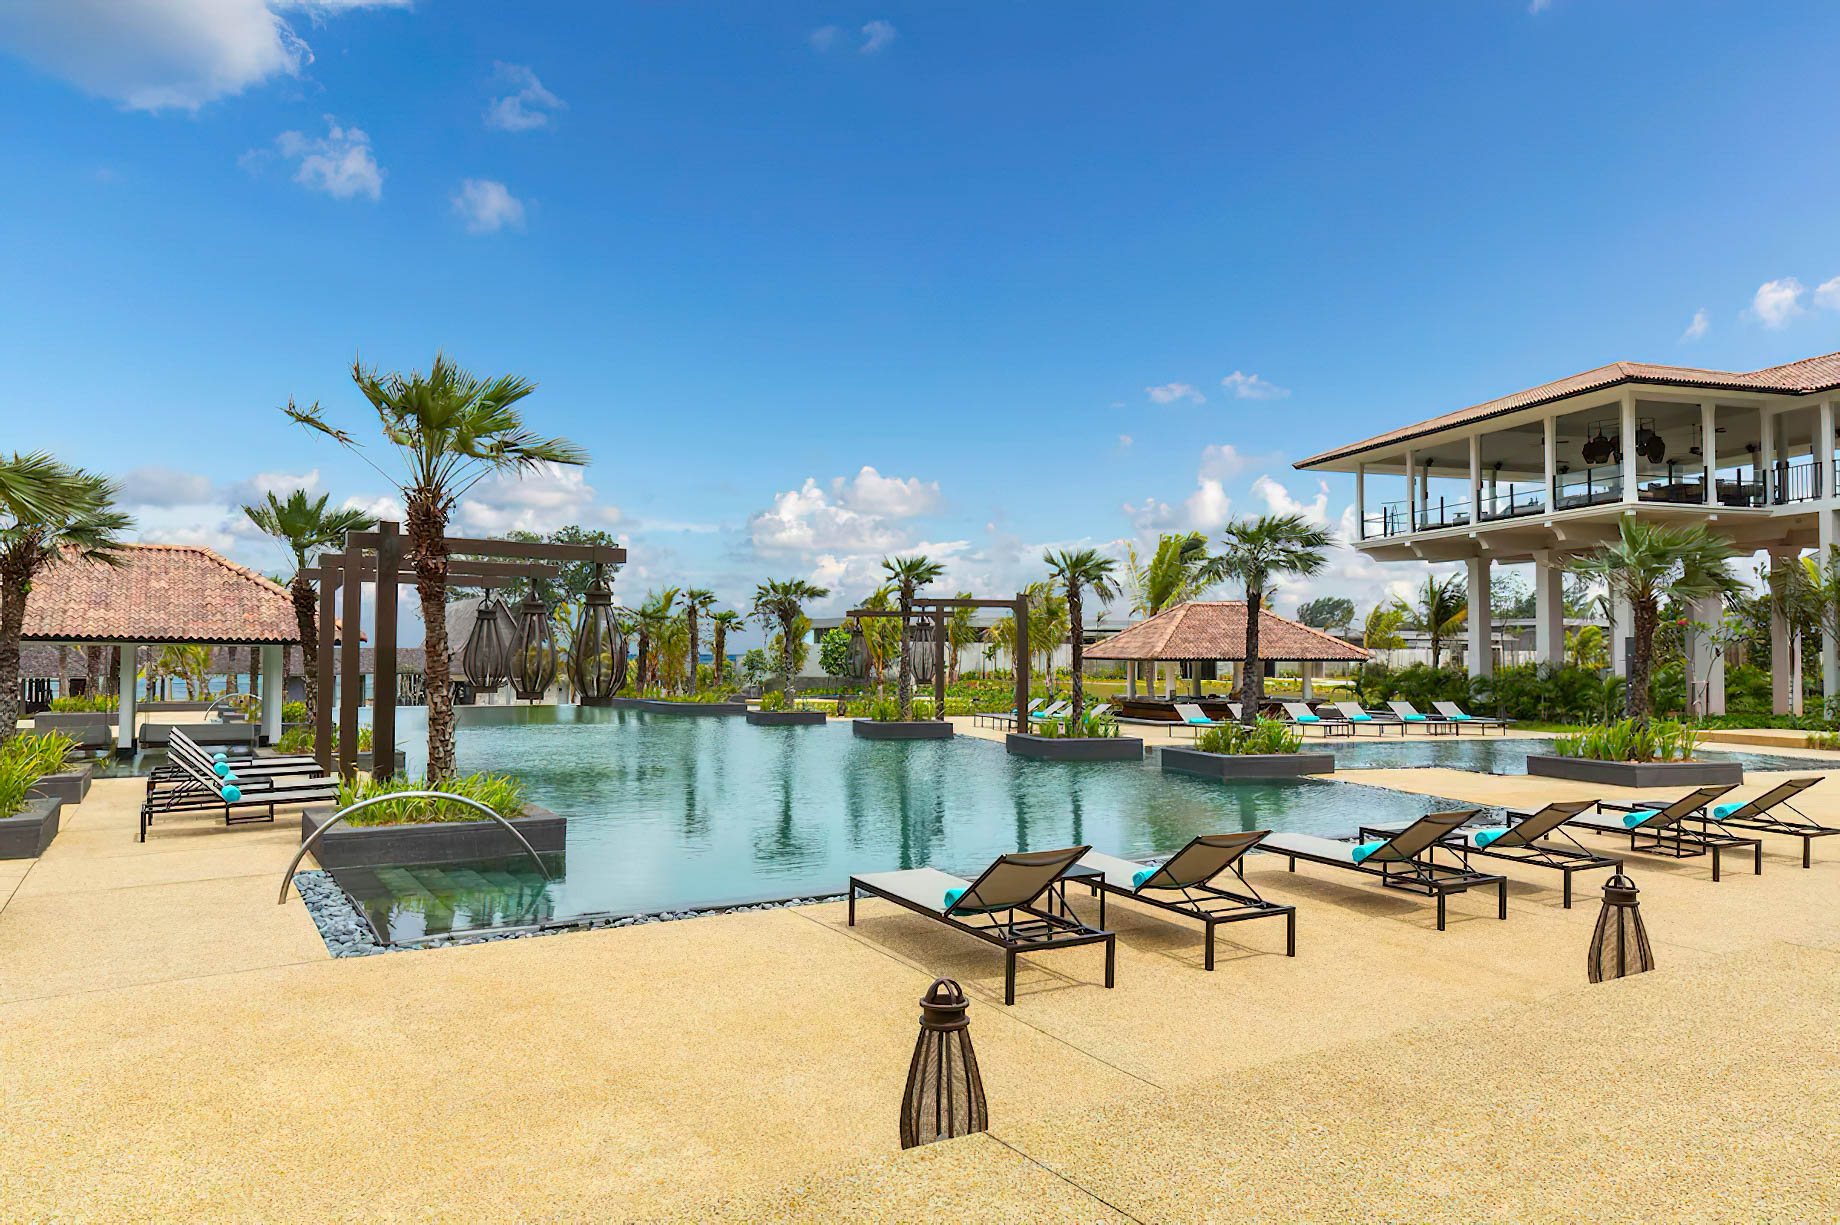 Anantara Desaru Coast Resort & Villas – Johor, Malaysia – Exterior Pool Deck